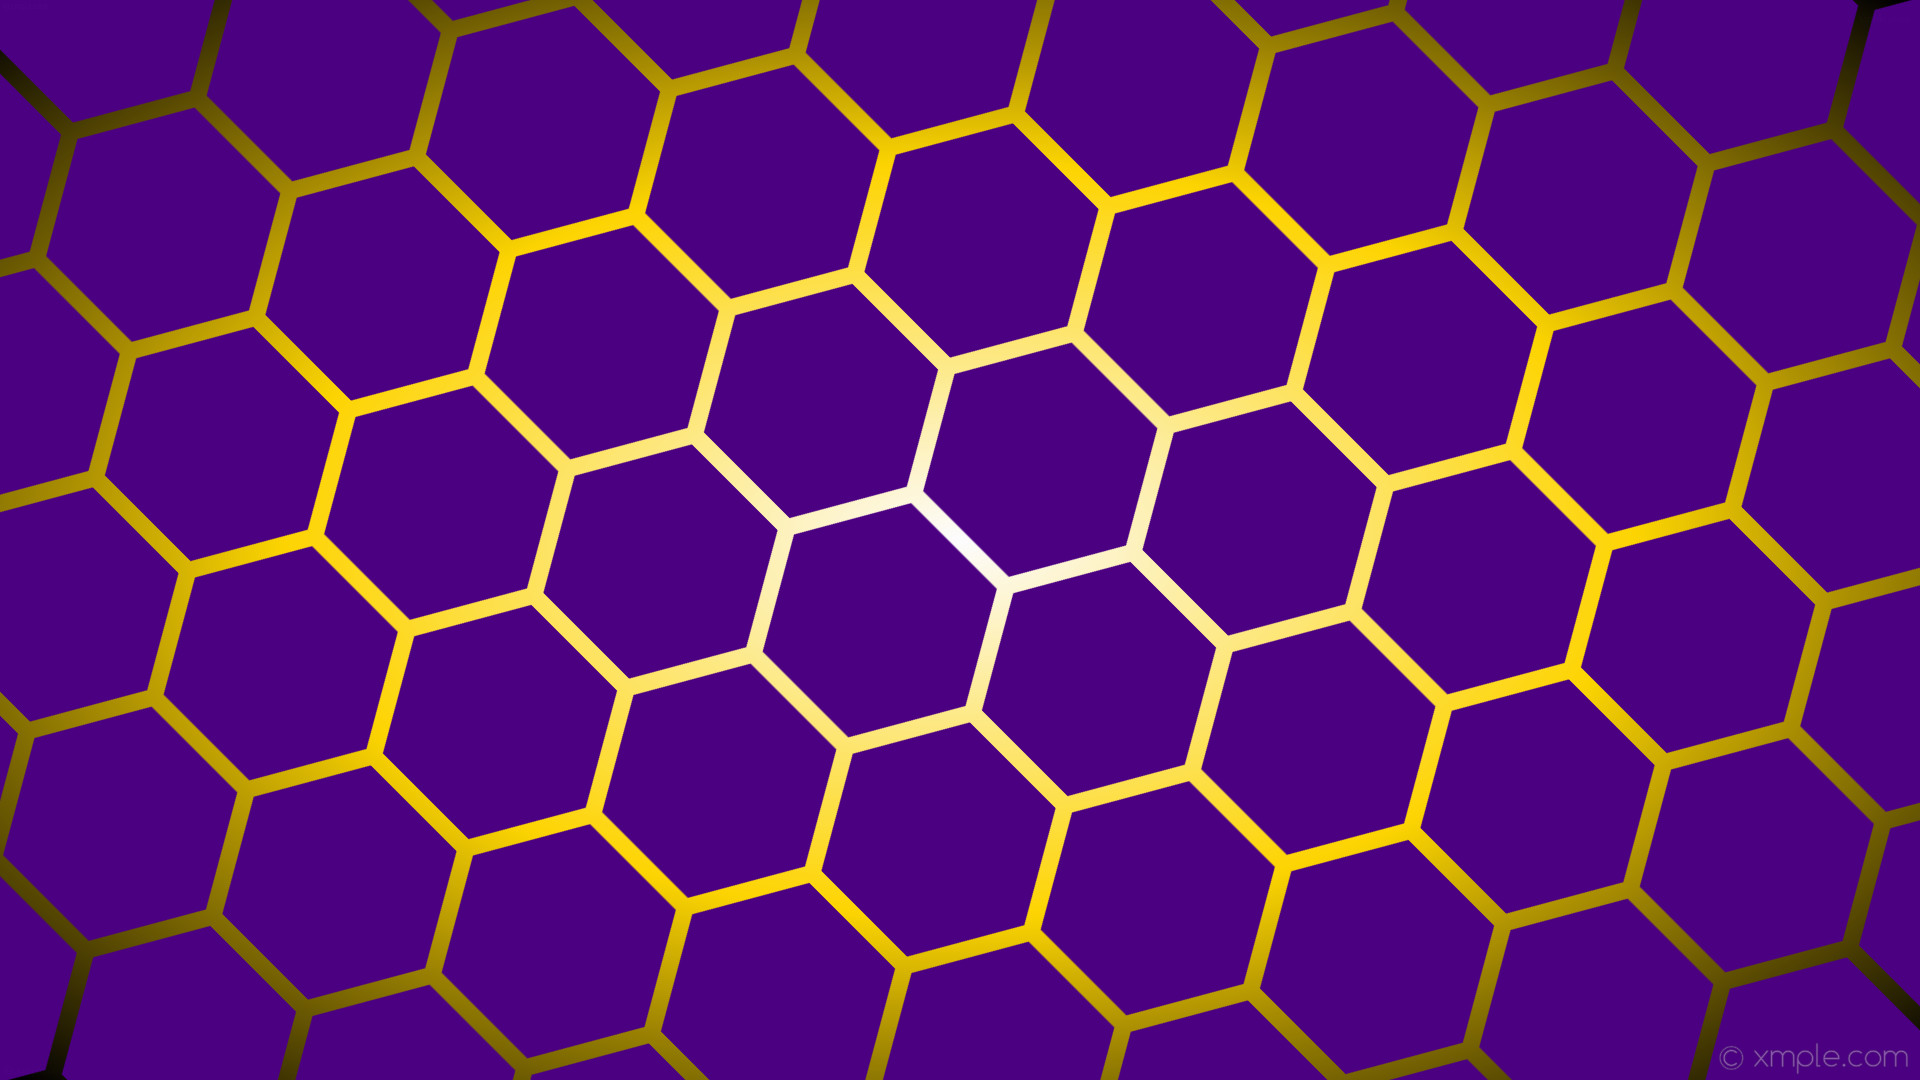 1920x1080 wallpaper gradient glow purple yellow hexagon white black indigo gold  #4b0082 #ffffff #ffd700